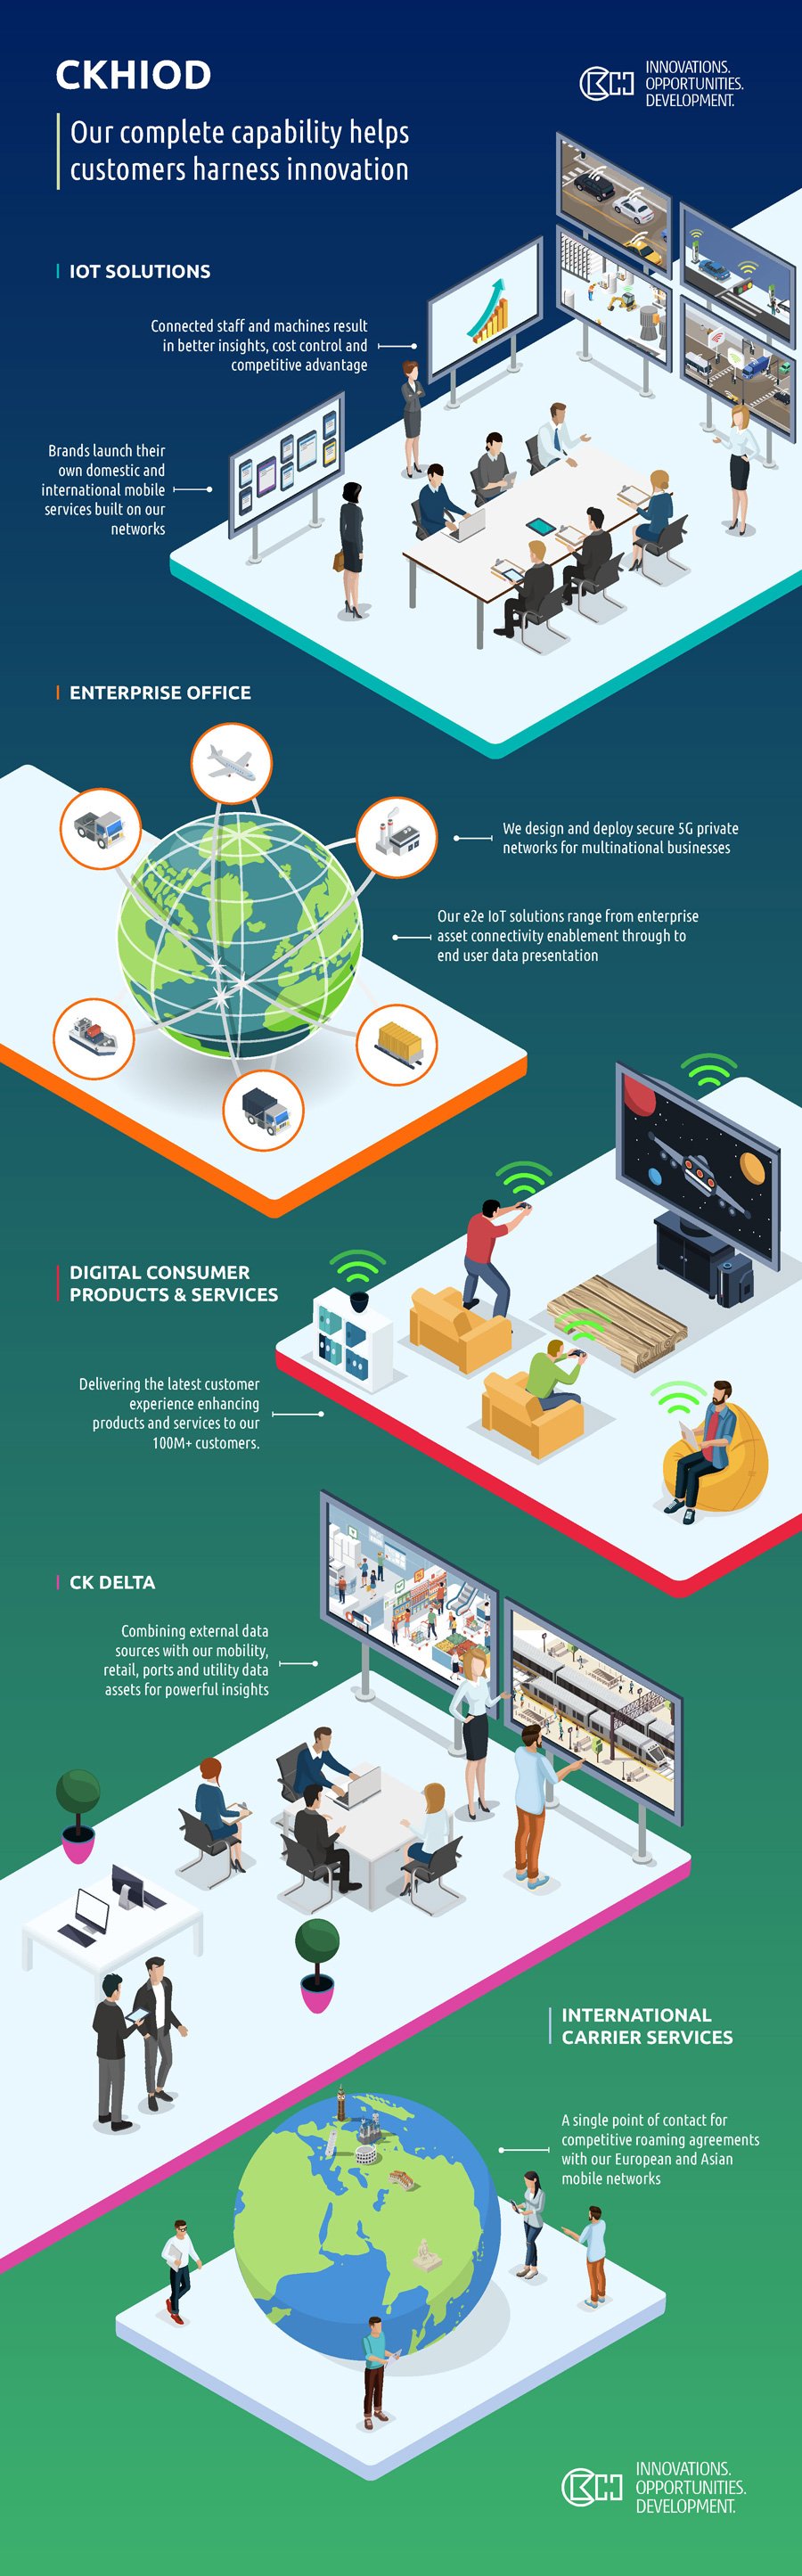 CKH innovation communication infographic